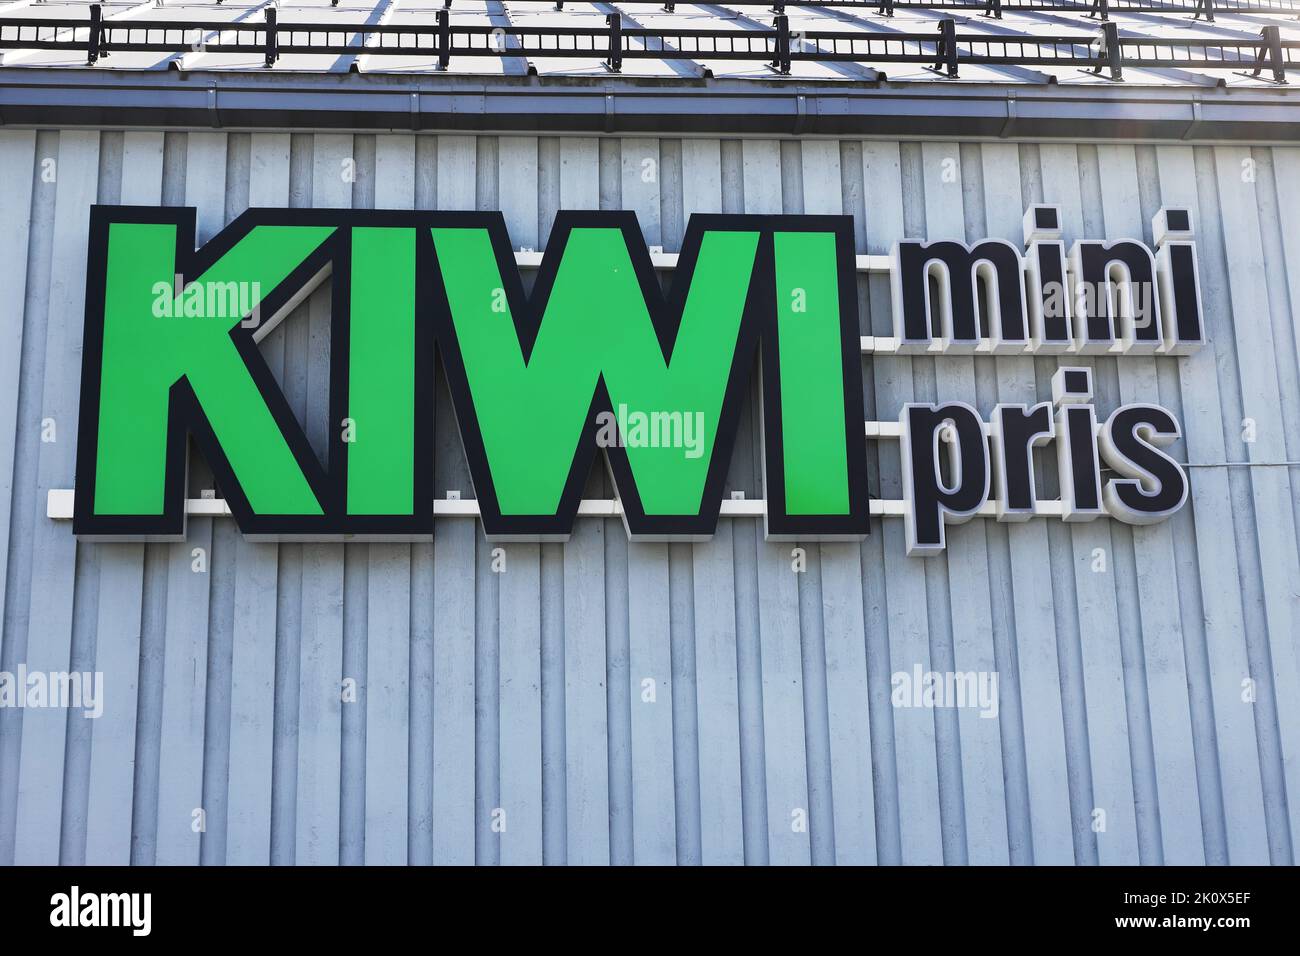 Storen, Norway - September 2, 2022: Close-up view of the Kiwi supermarket logo. Stock Photo